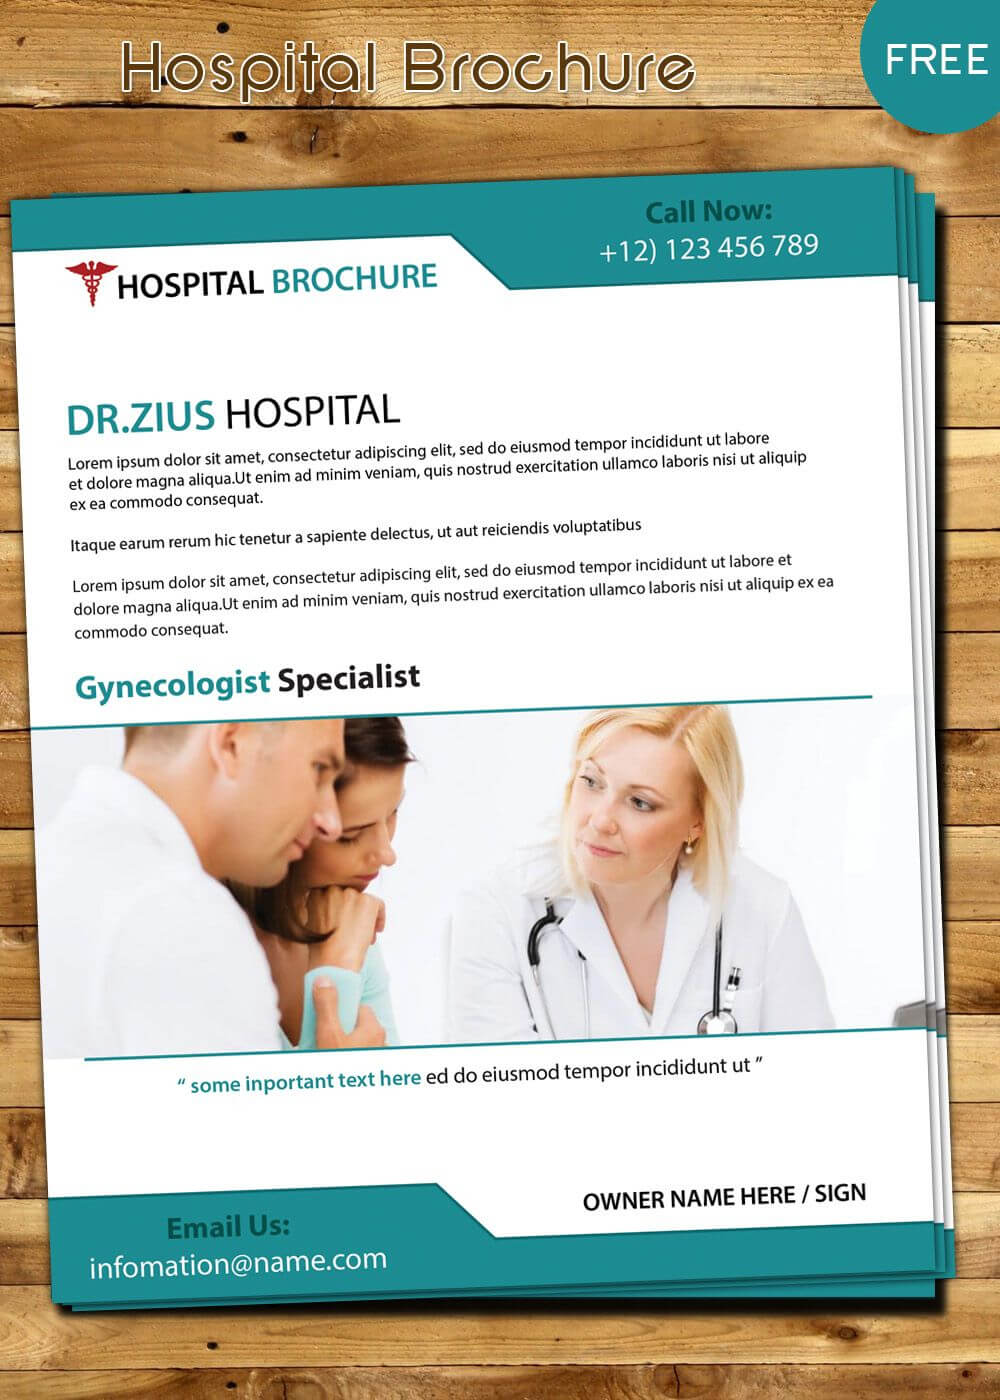 Free Hospital Vector Brochure Download | Medical Design With Healthcare Brochure Templates Free Download